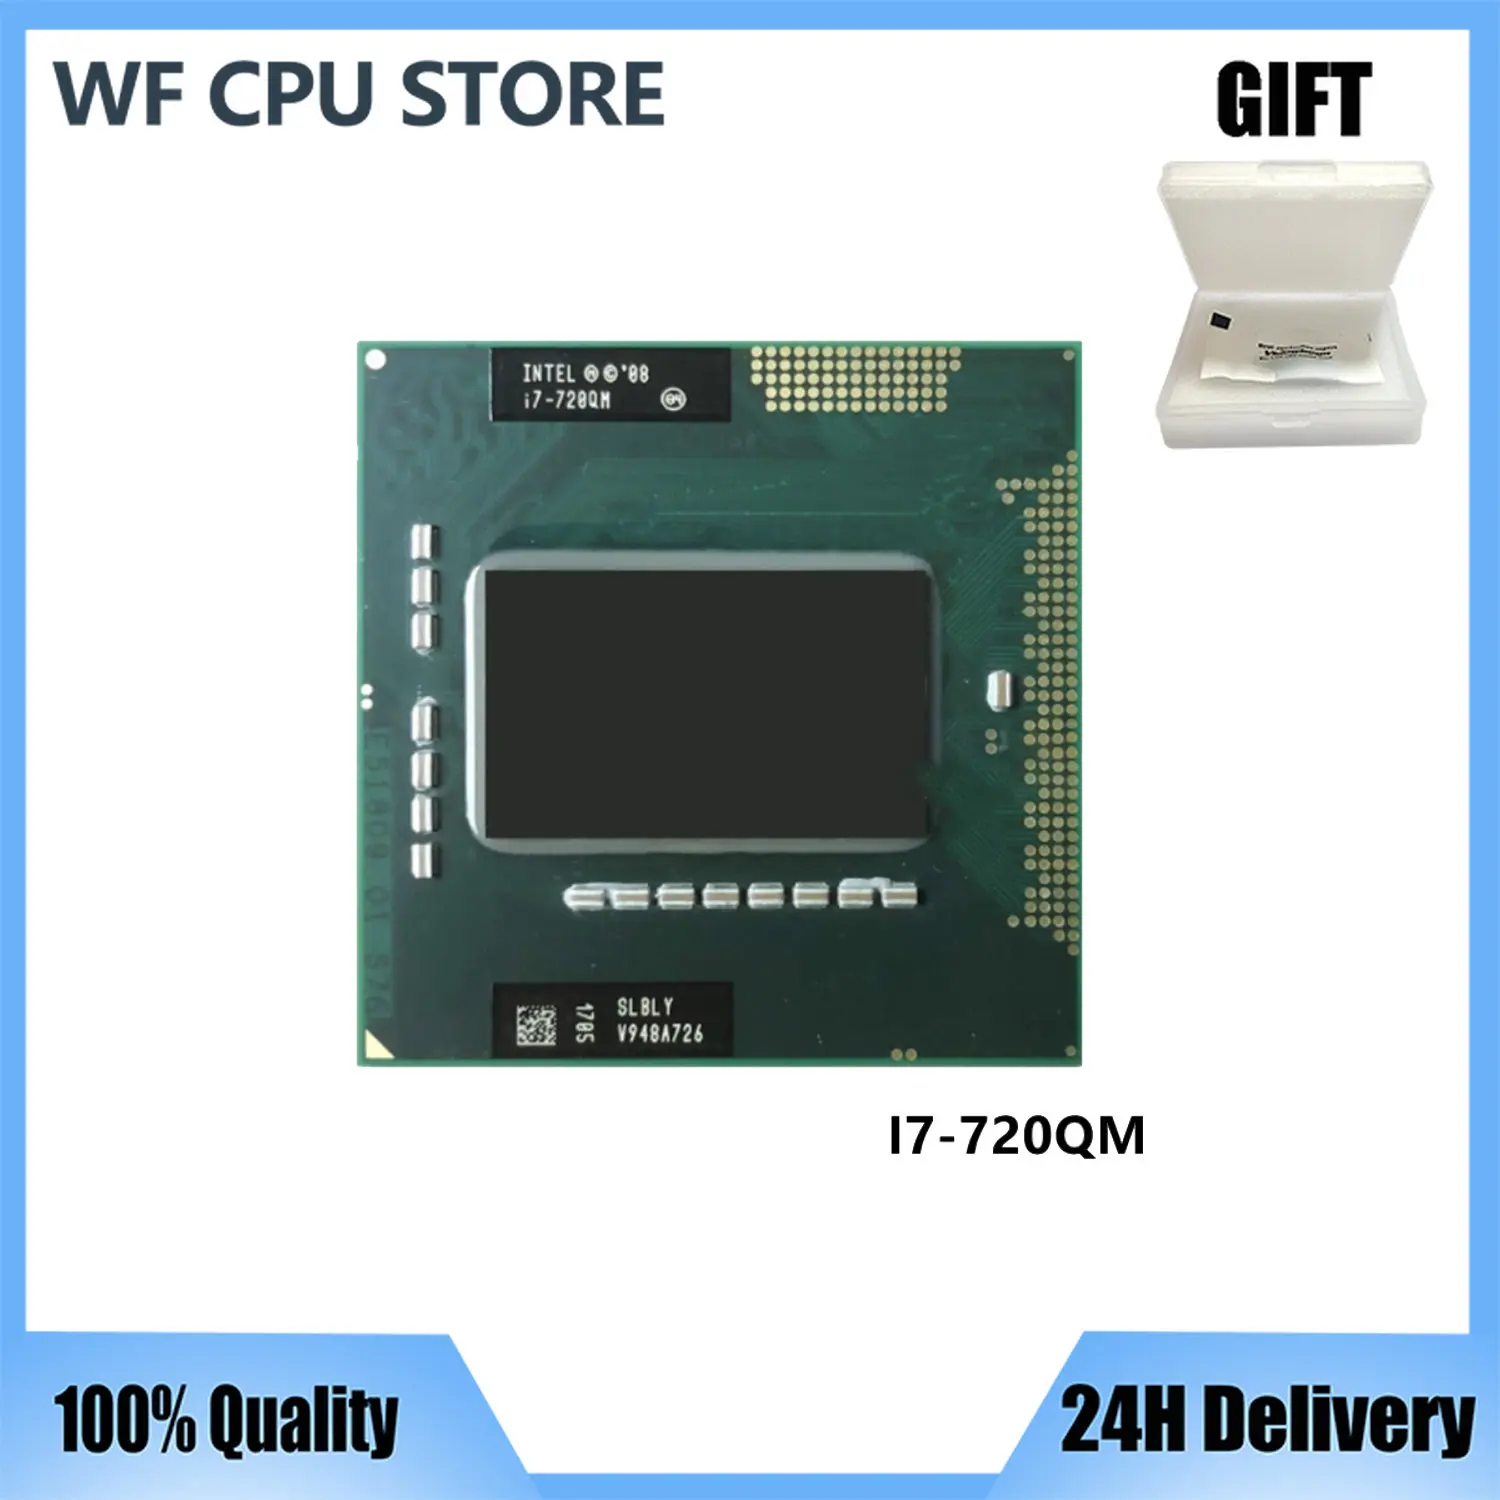 

Intel Core i7-720QM i7 720QM SLBLY 1.6 GHz Quad-Core Eight-Thread CPU Processor 6W 45W Socket G1 / rPGA988A